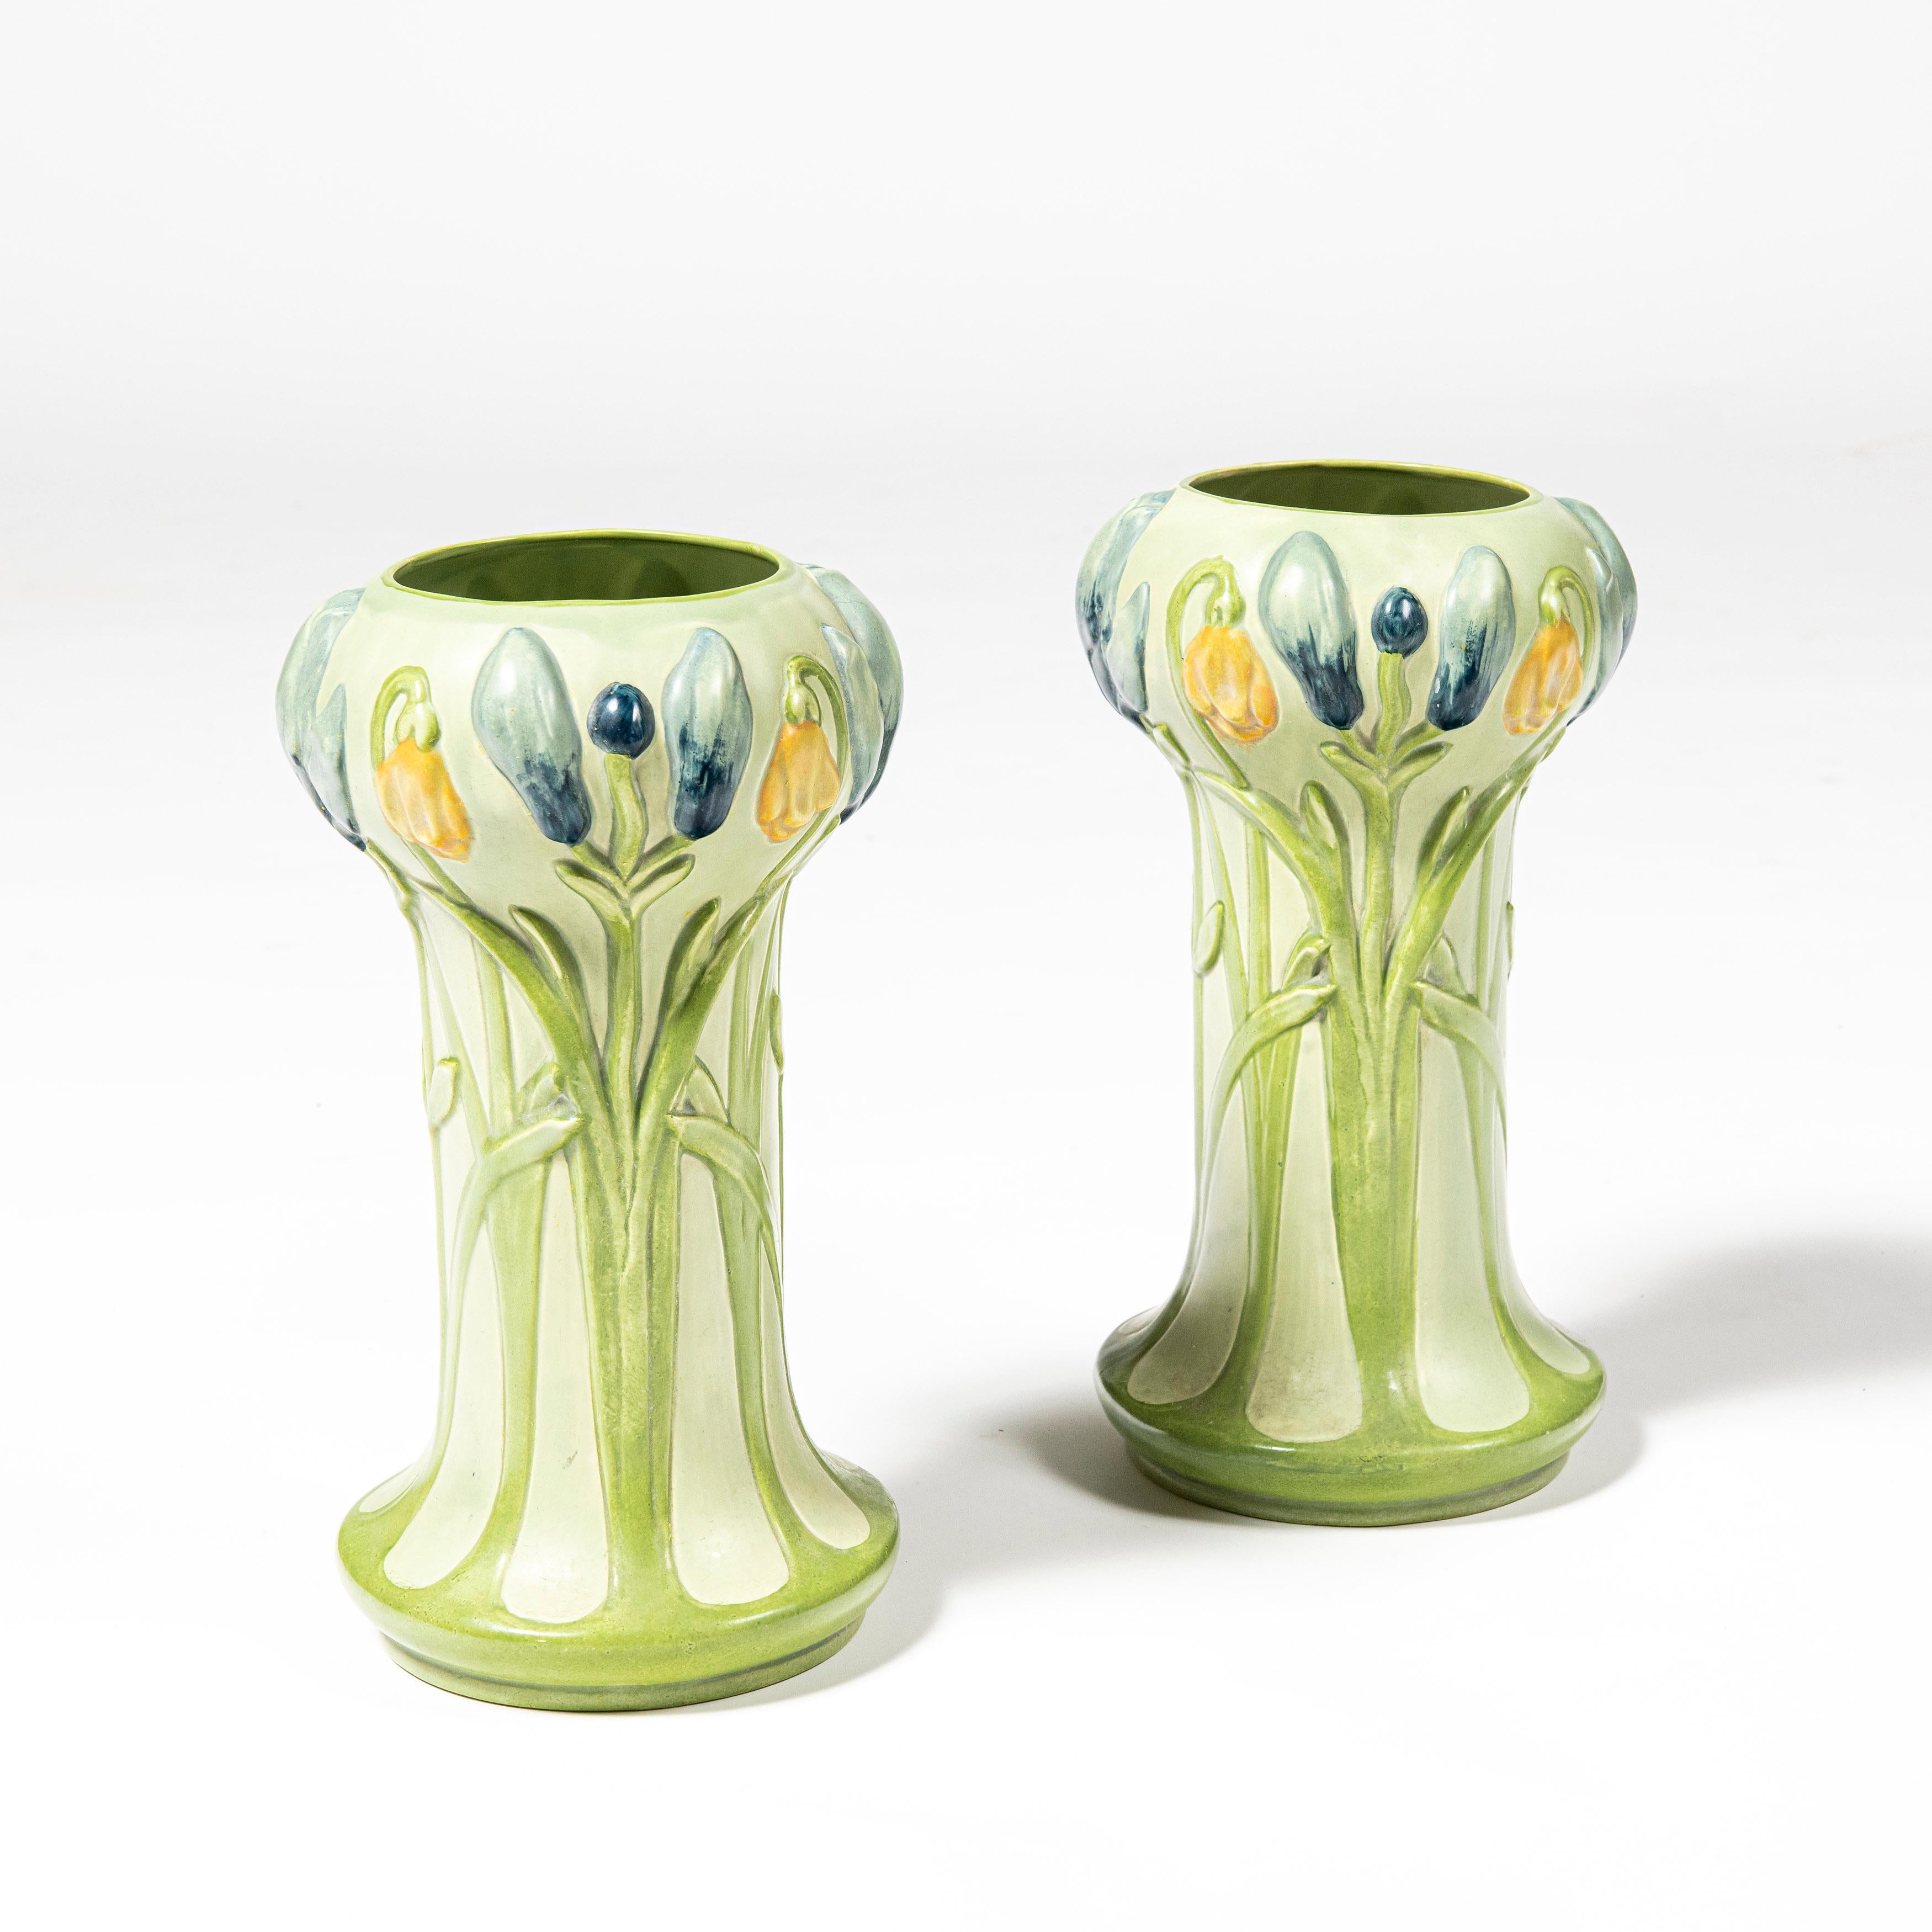 Pair of polychromed ceramic vase by Julius Dressler, Austria, early 20th century.
 